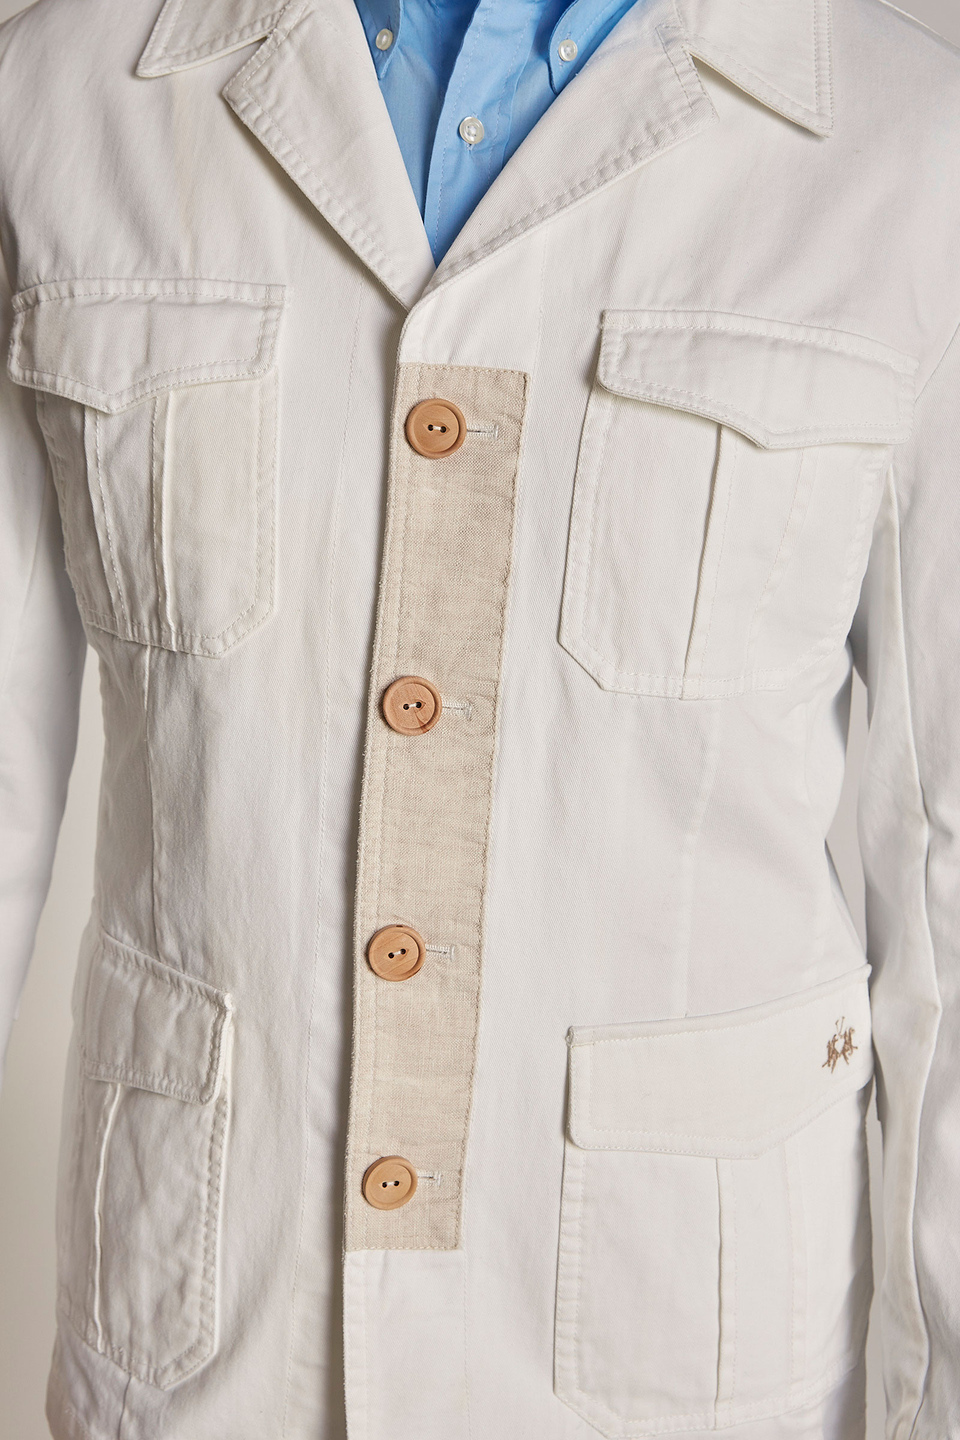 Chaqueta de hombre de algodón 100 %, modelo sahariana, corte regular | La Martina - Official Online Shop